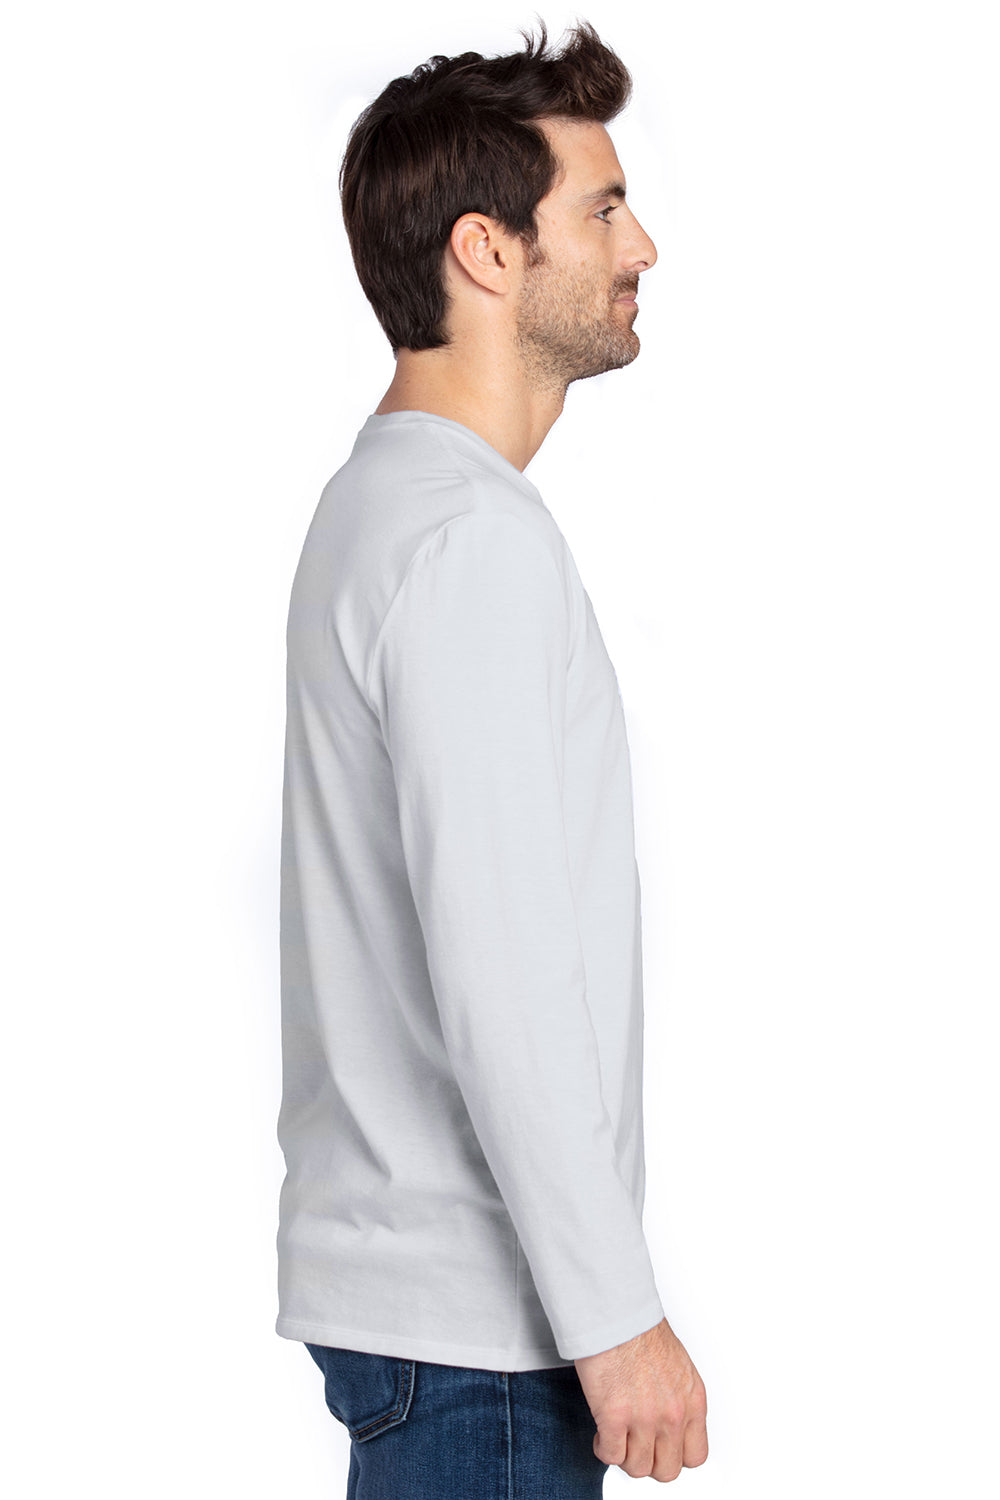 Threadfast Apparel 100LS Mens Ultimate Long Sleeve Crewneck T-Shirt Silver Grey Side